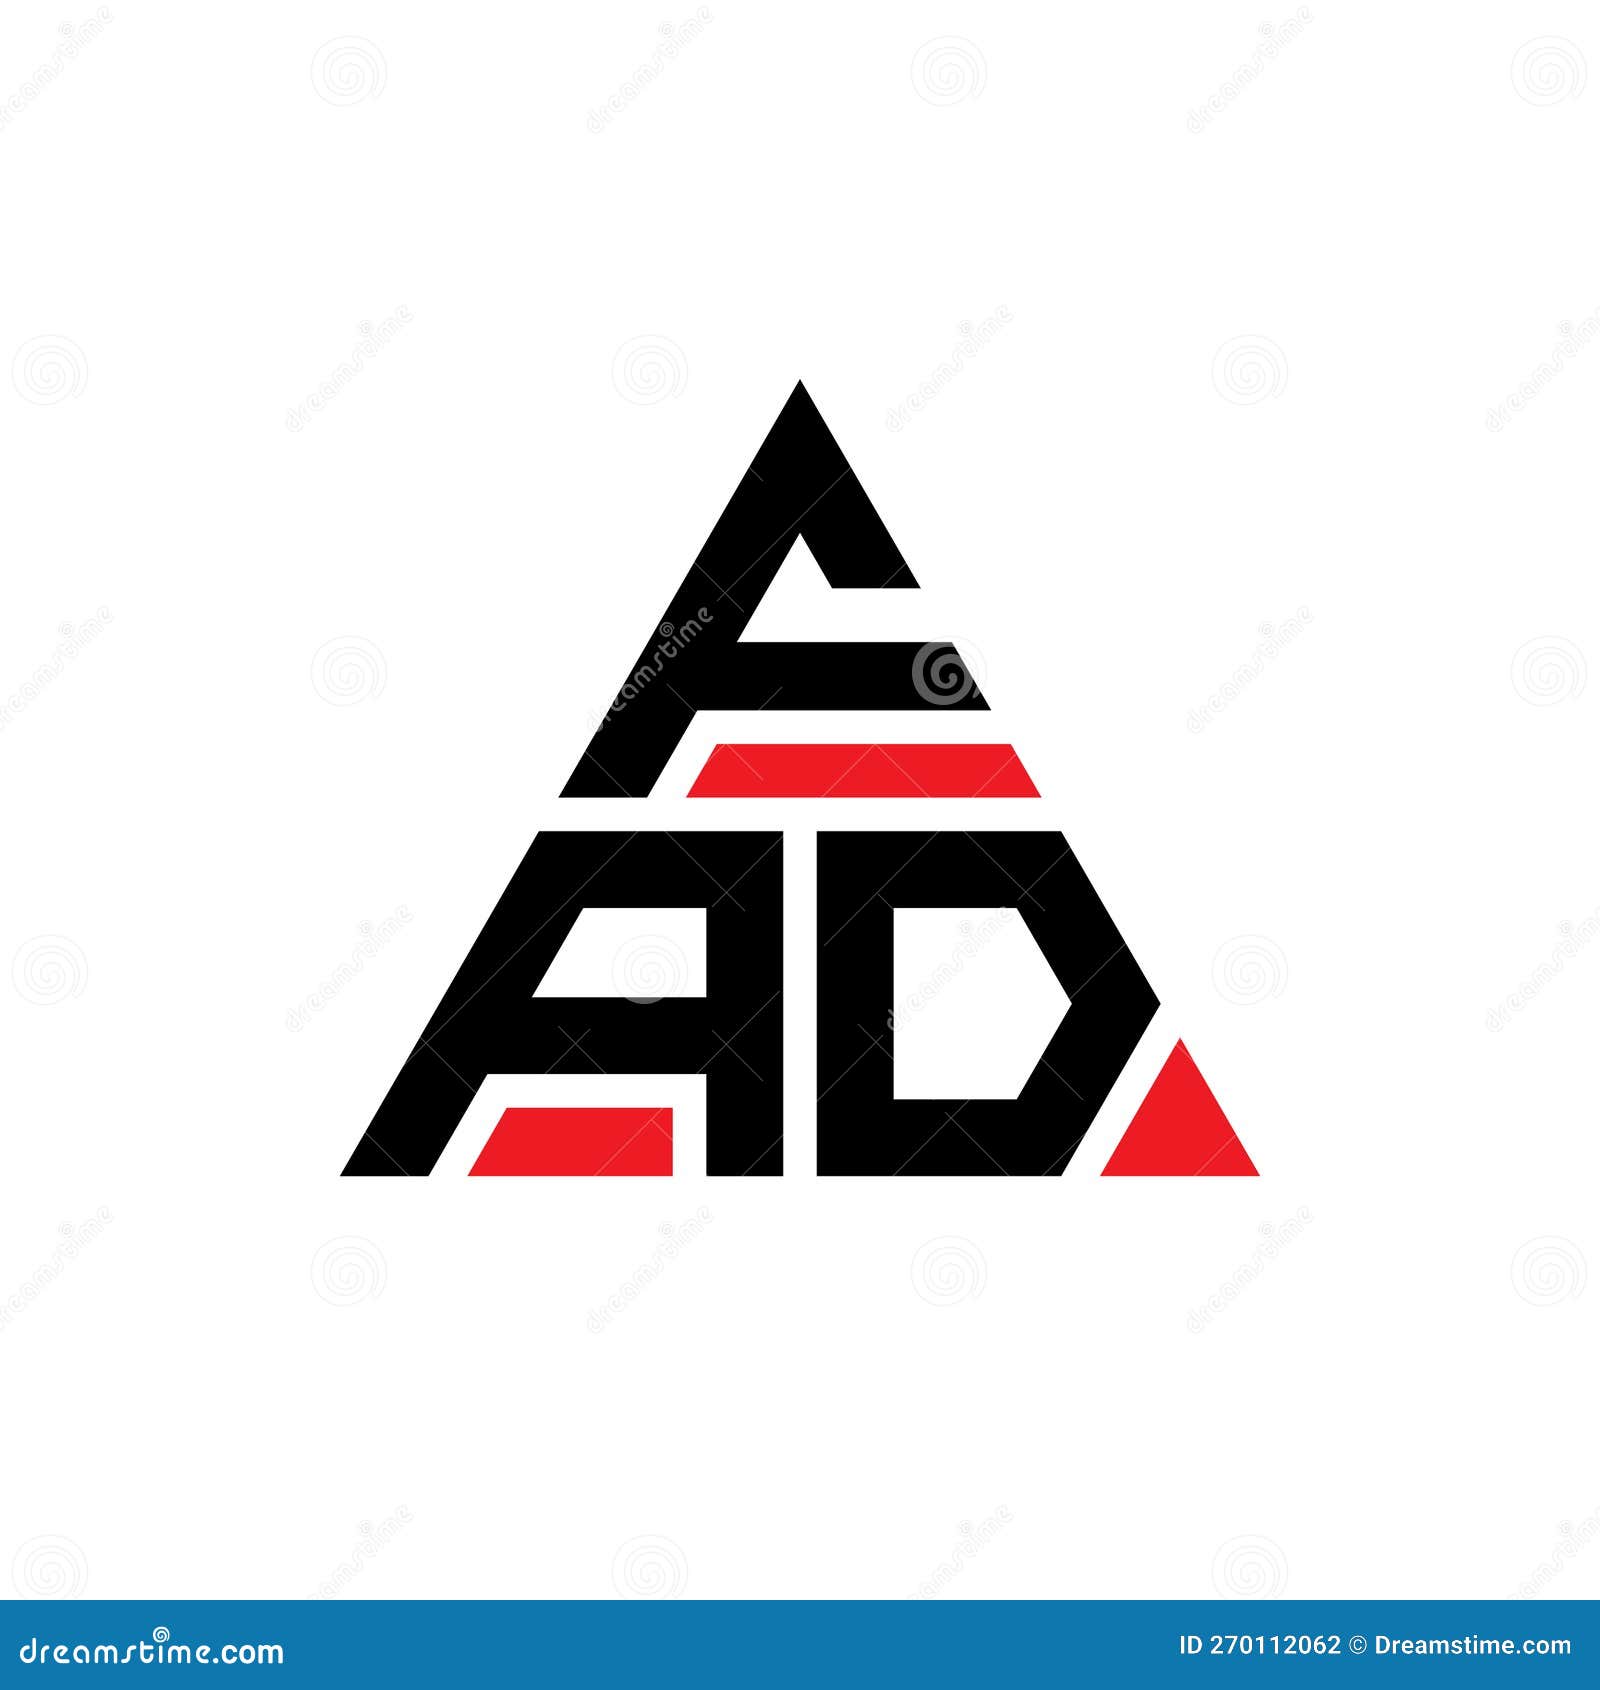 fad triangle letter logo  with triangle . fad triangle logo  monogram. fad triangle  logo template with red